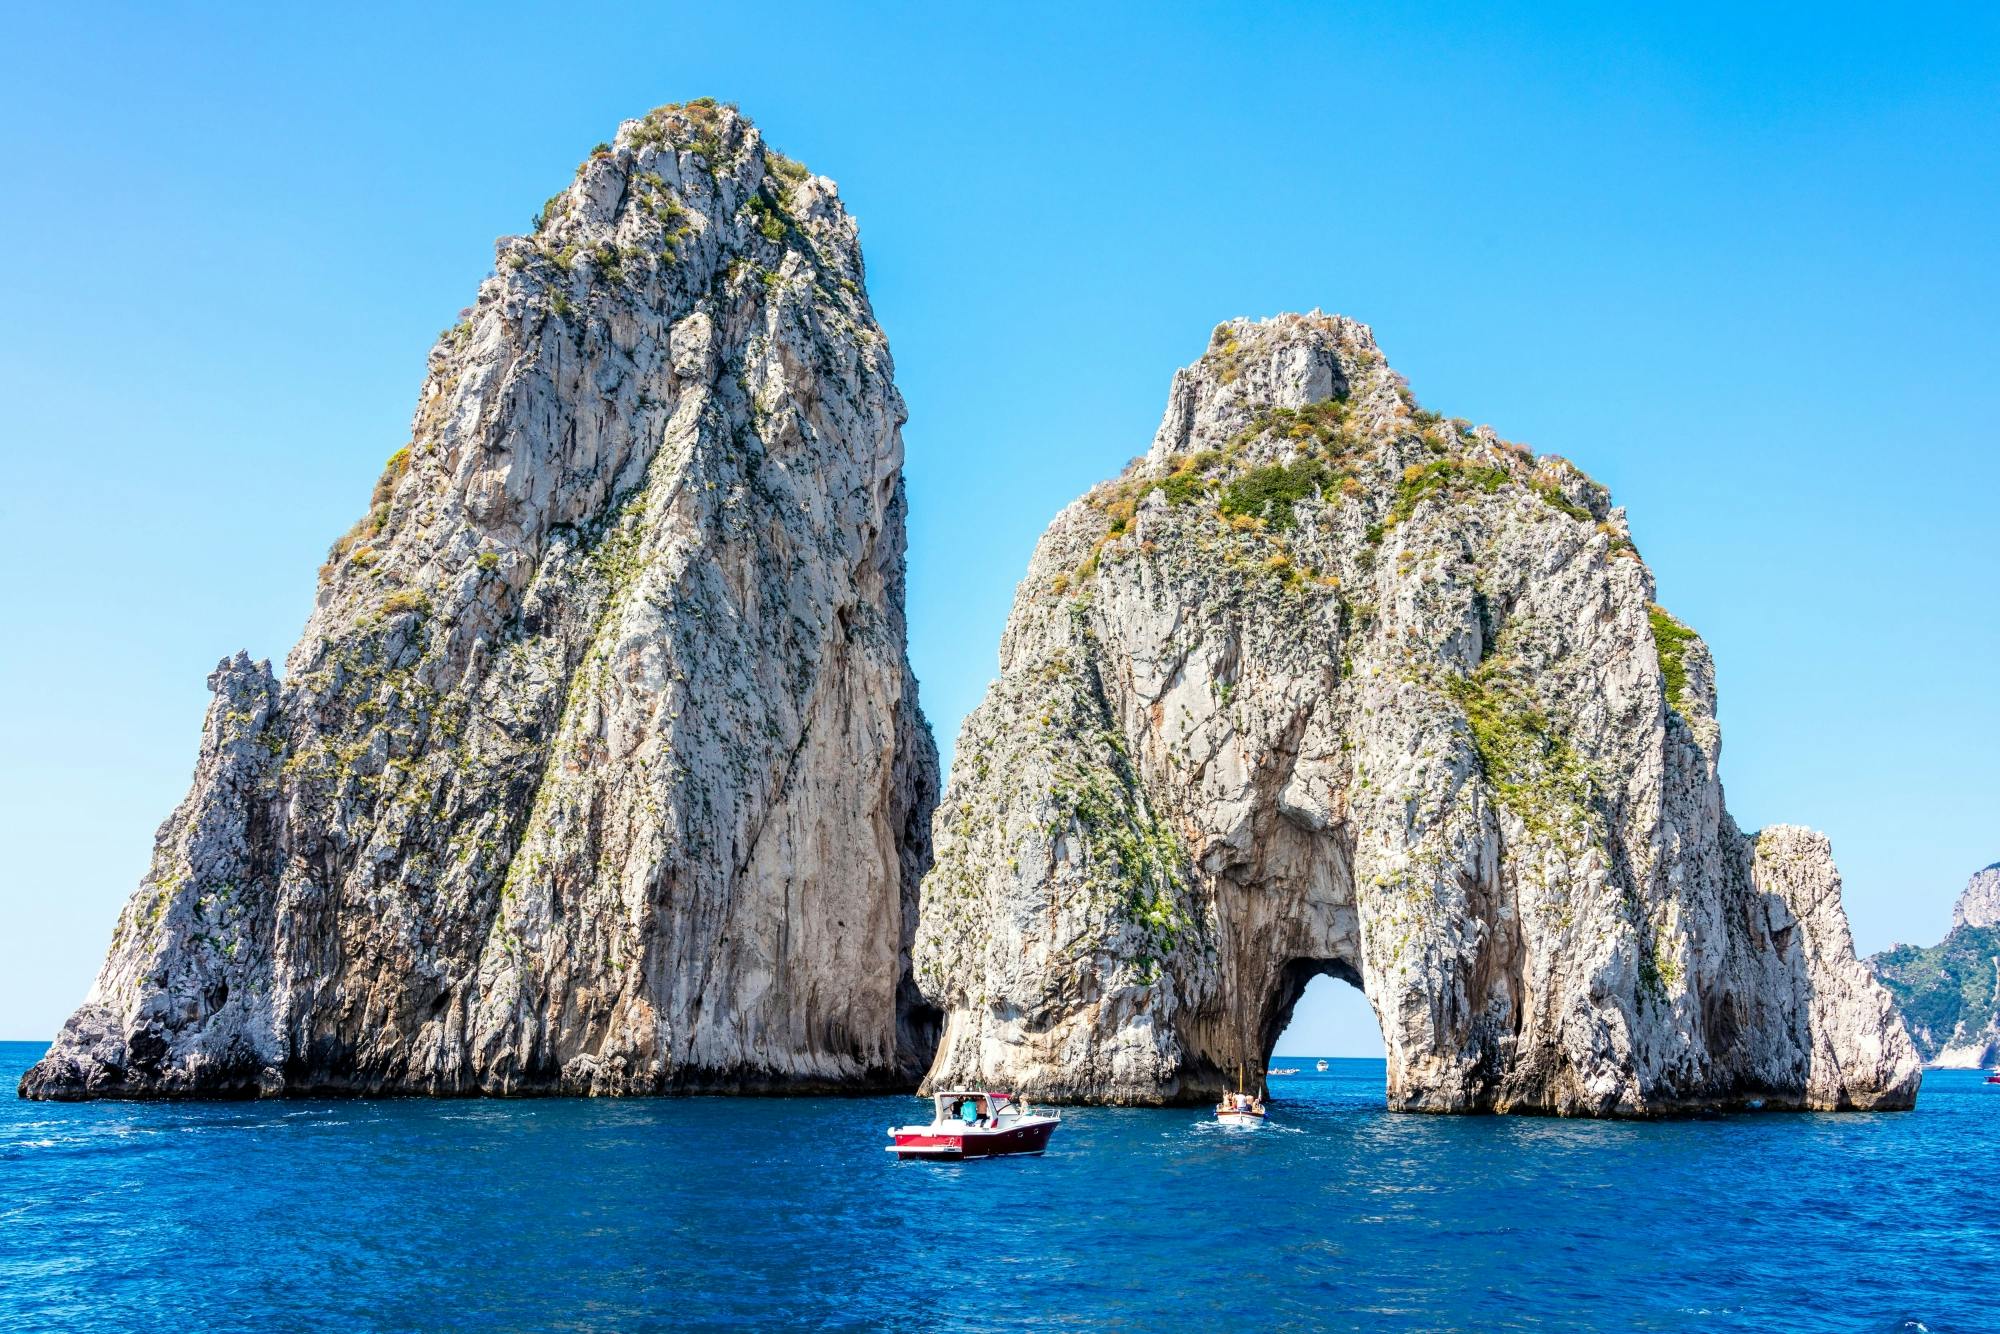 Private Boat Trip to Capri from Sorrento